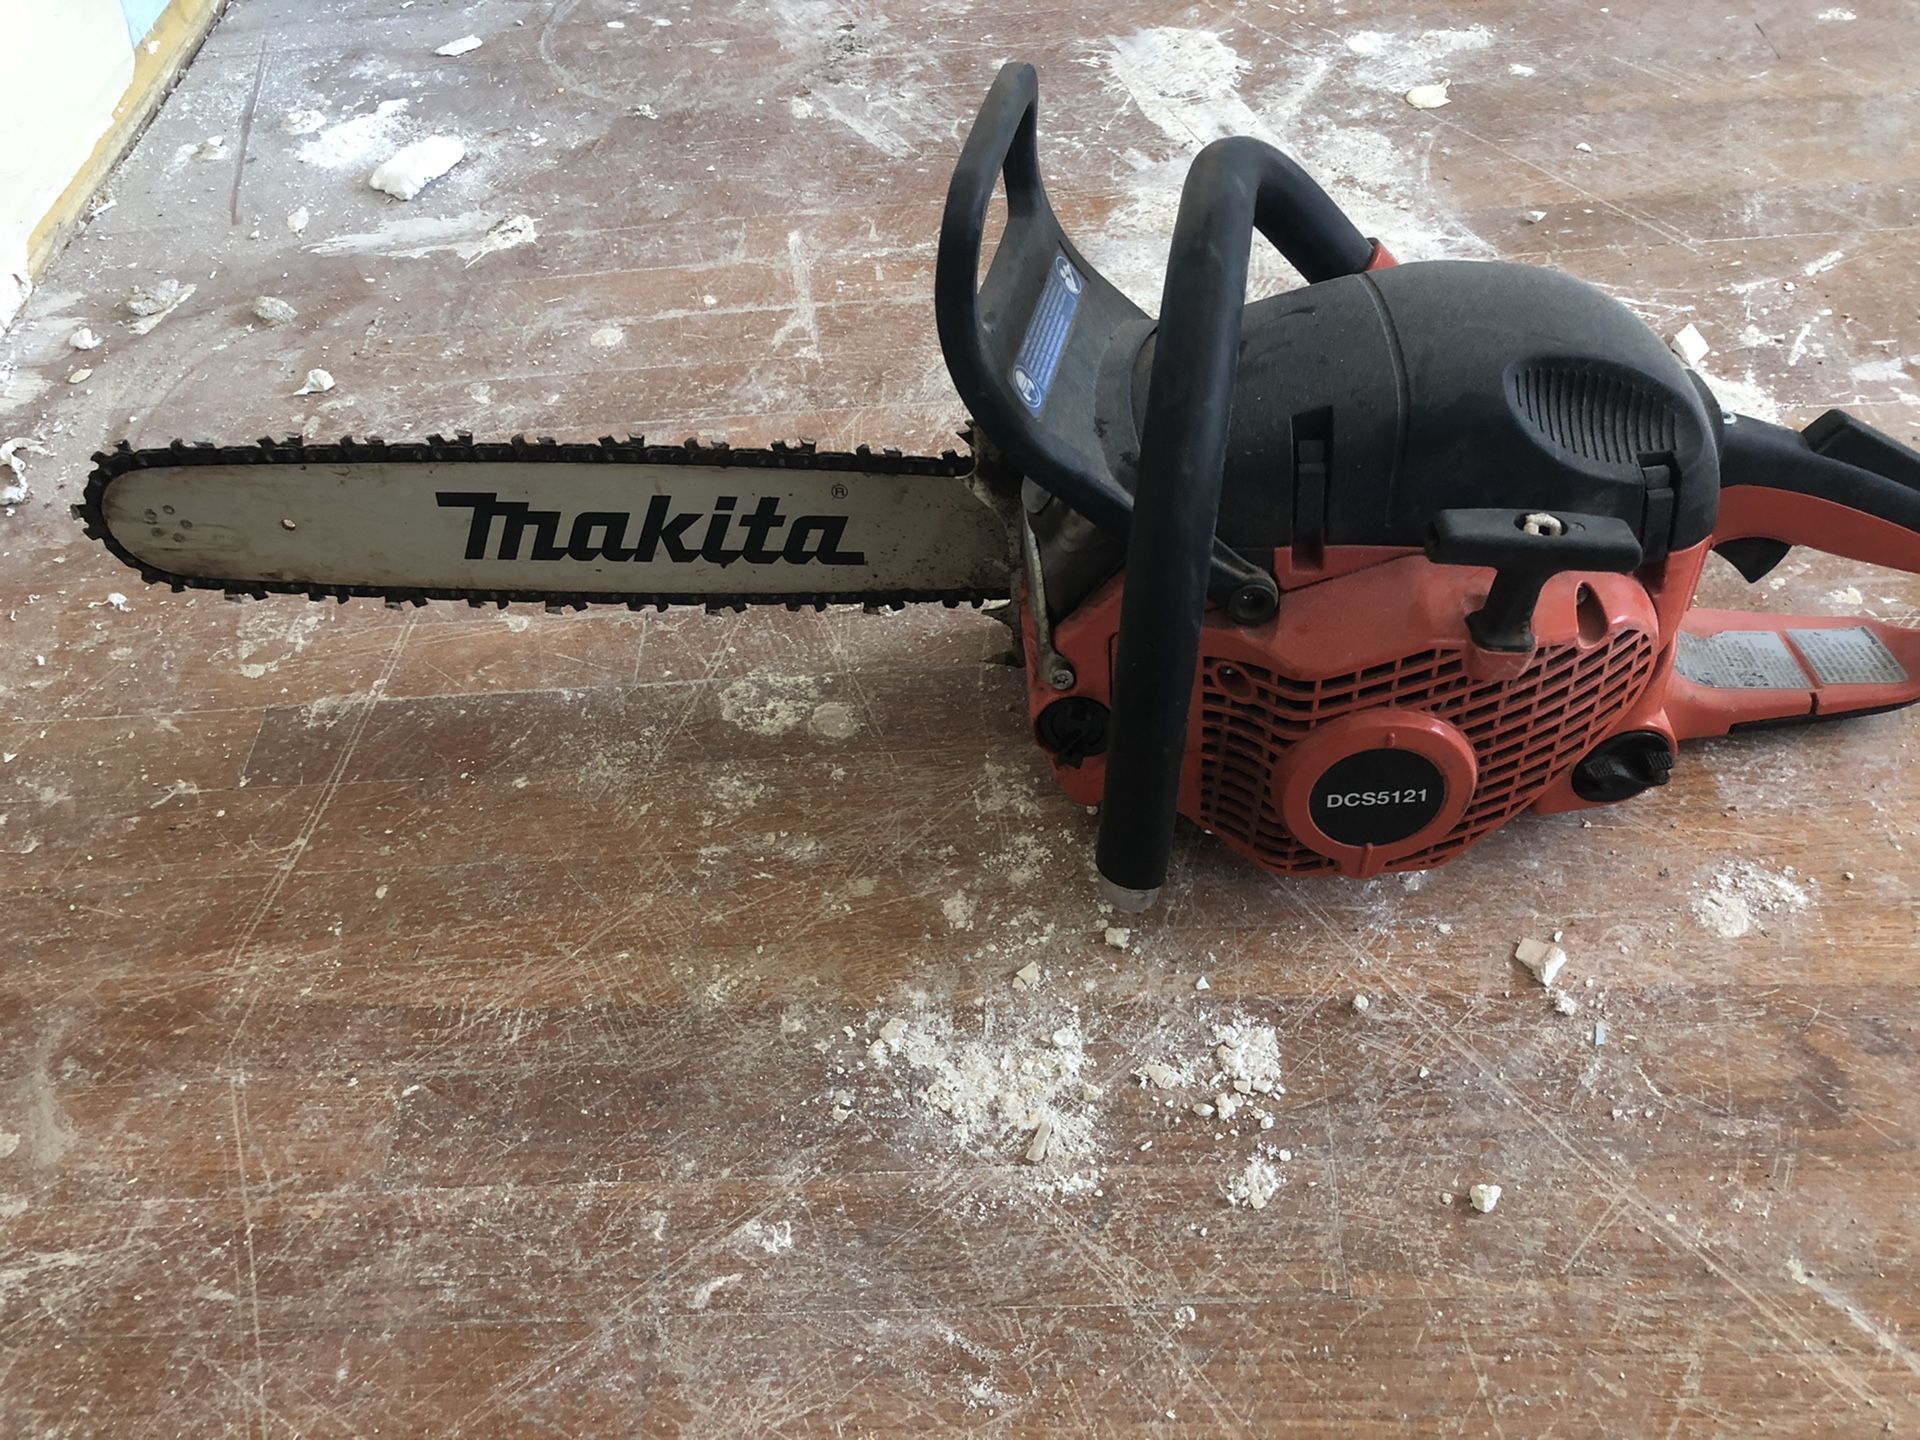 Makita chainsaw